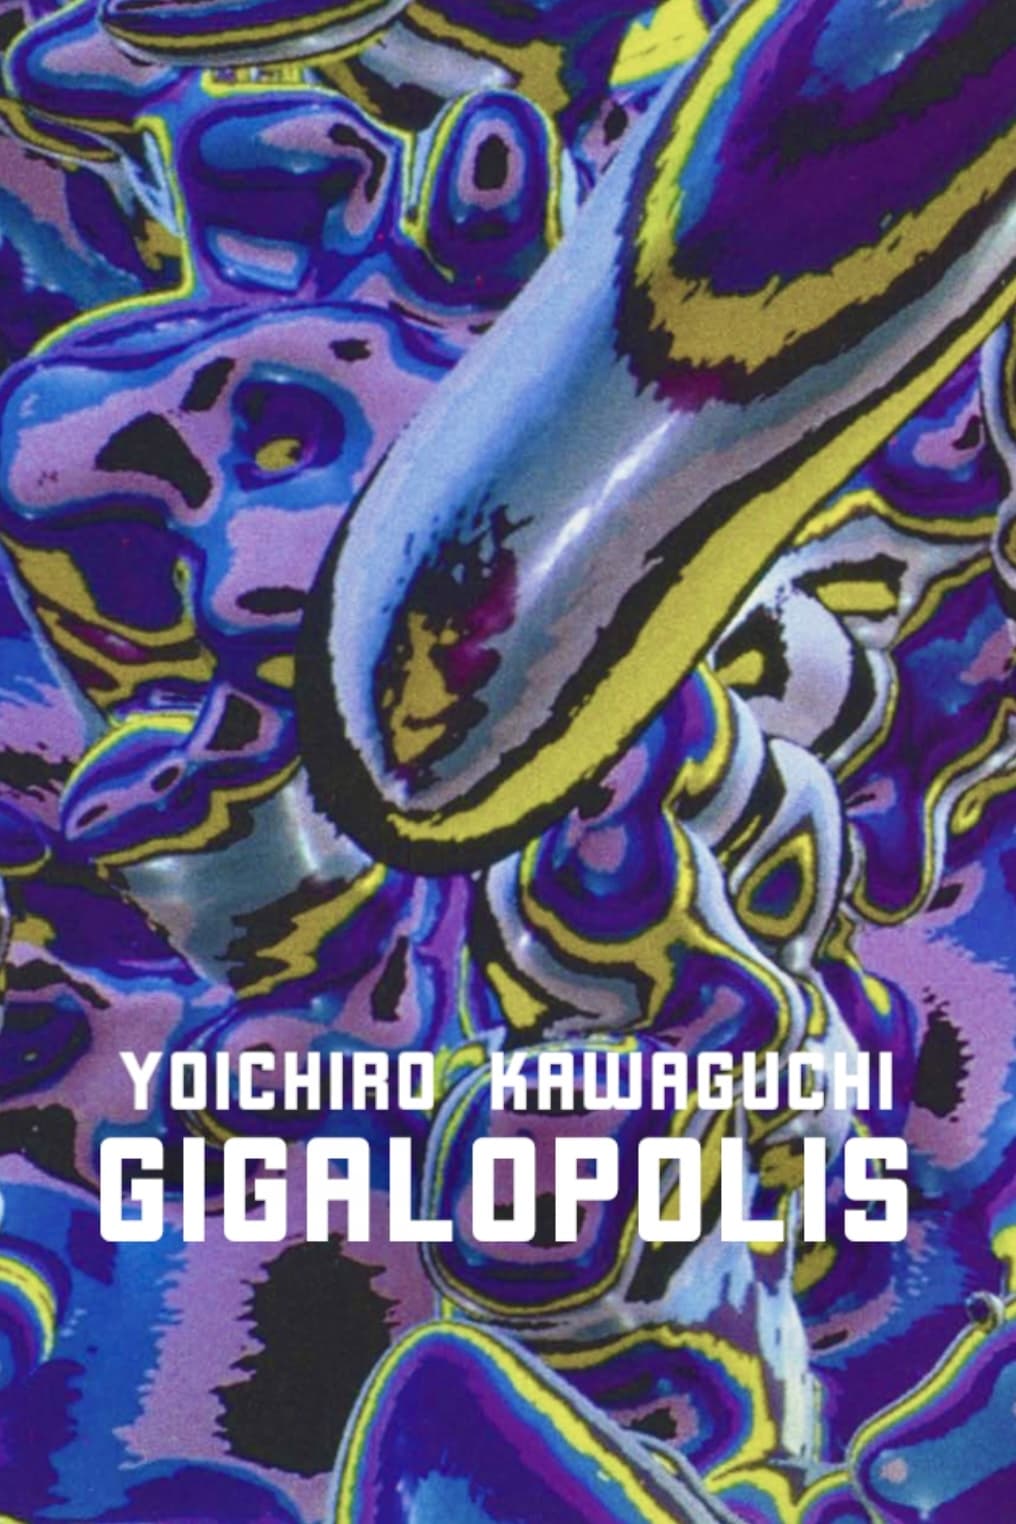 Gigalopolis